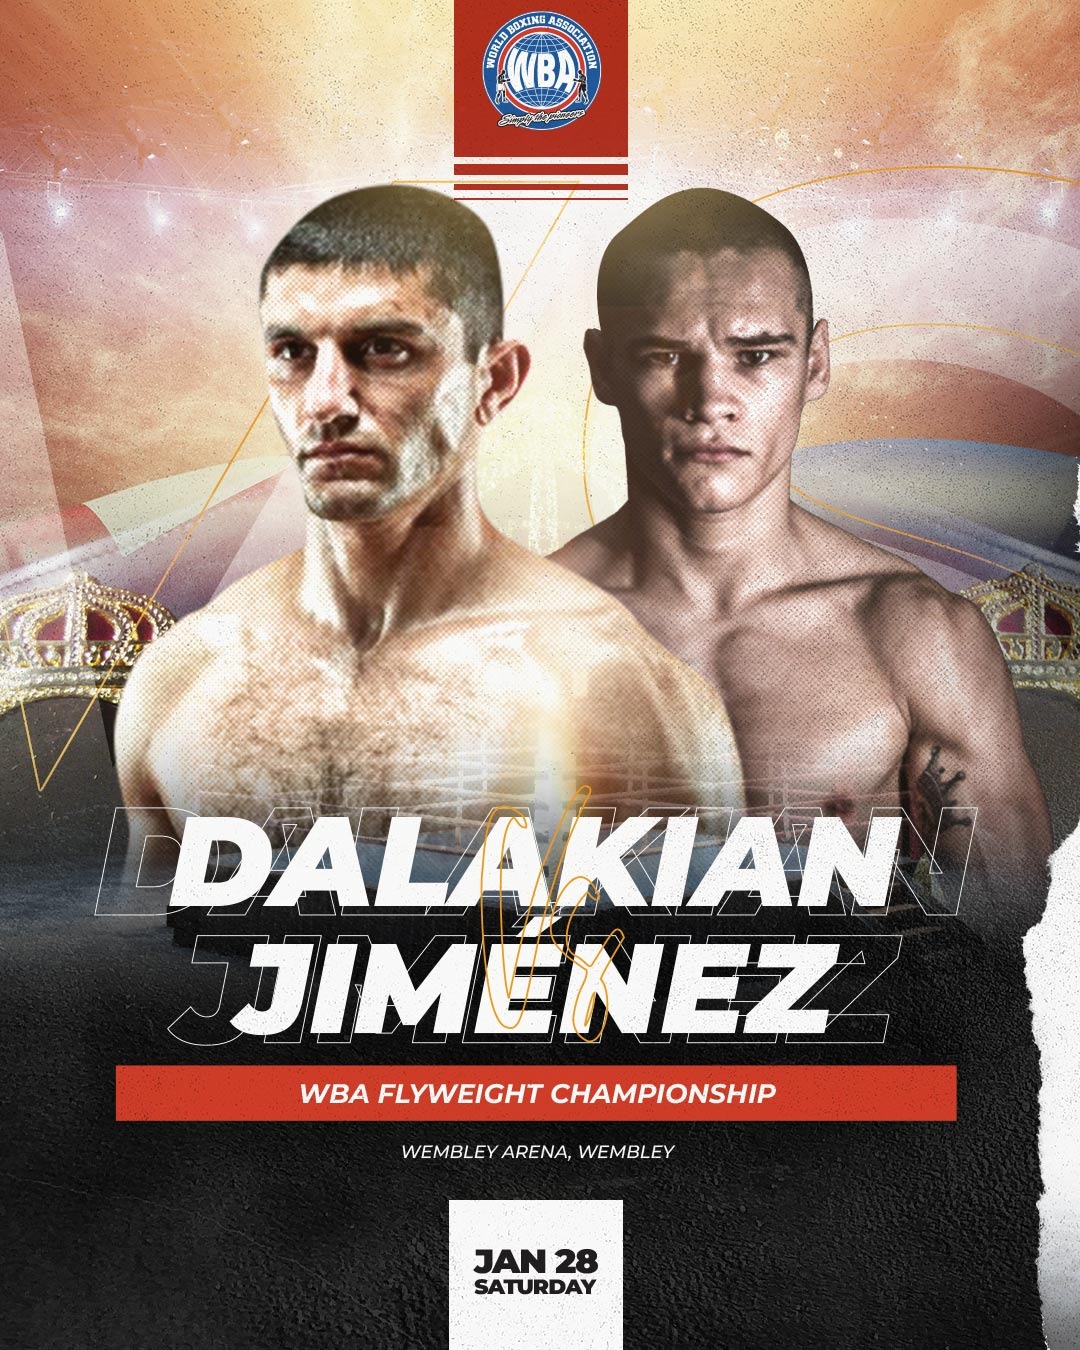 Dalakian-Jimenez for the WBA World Flyweight title